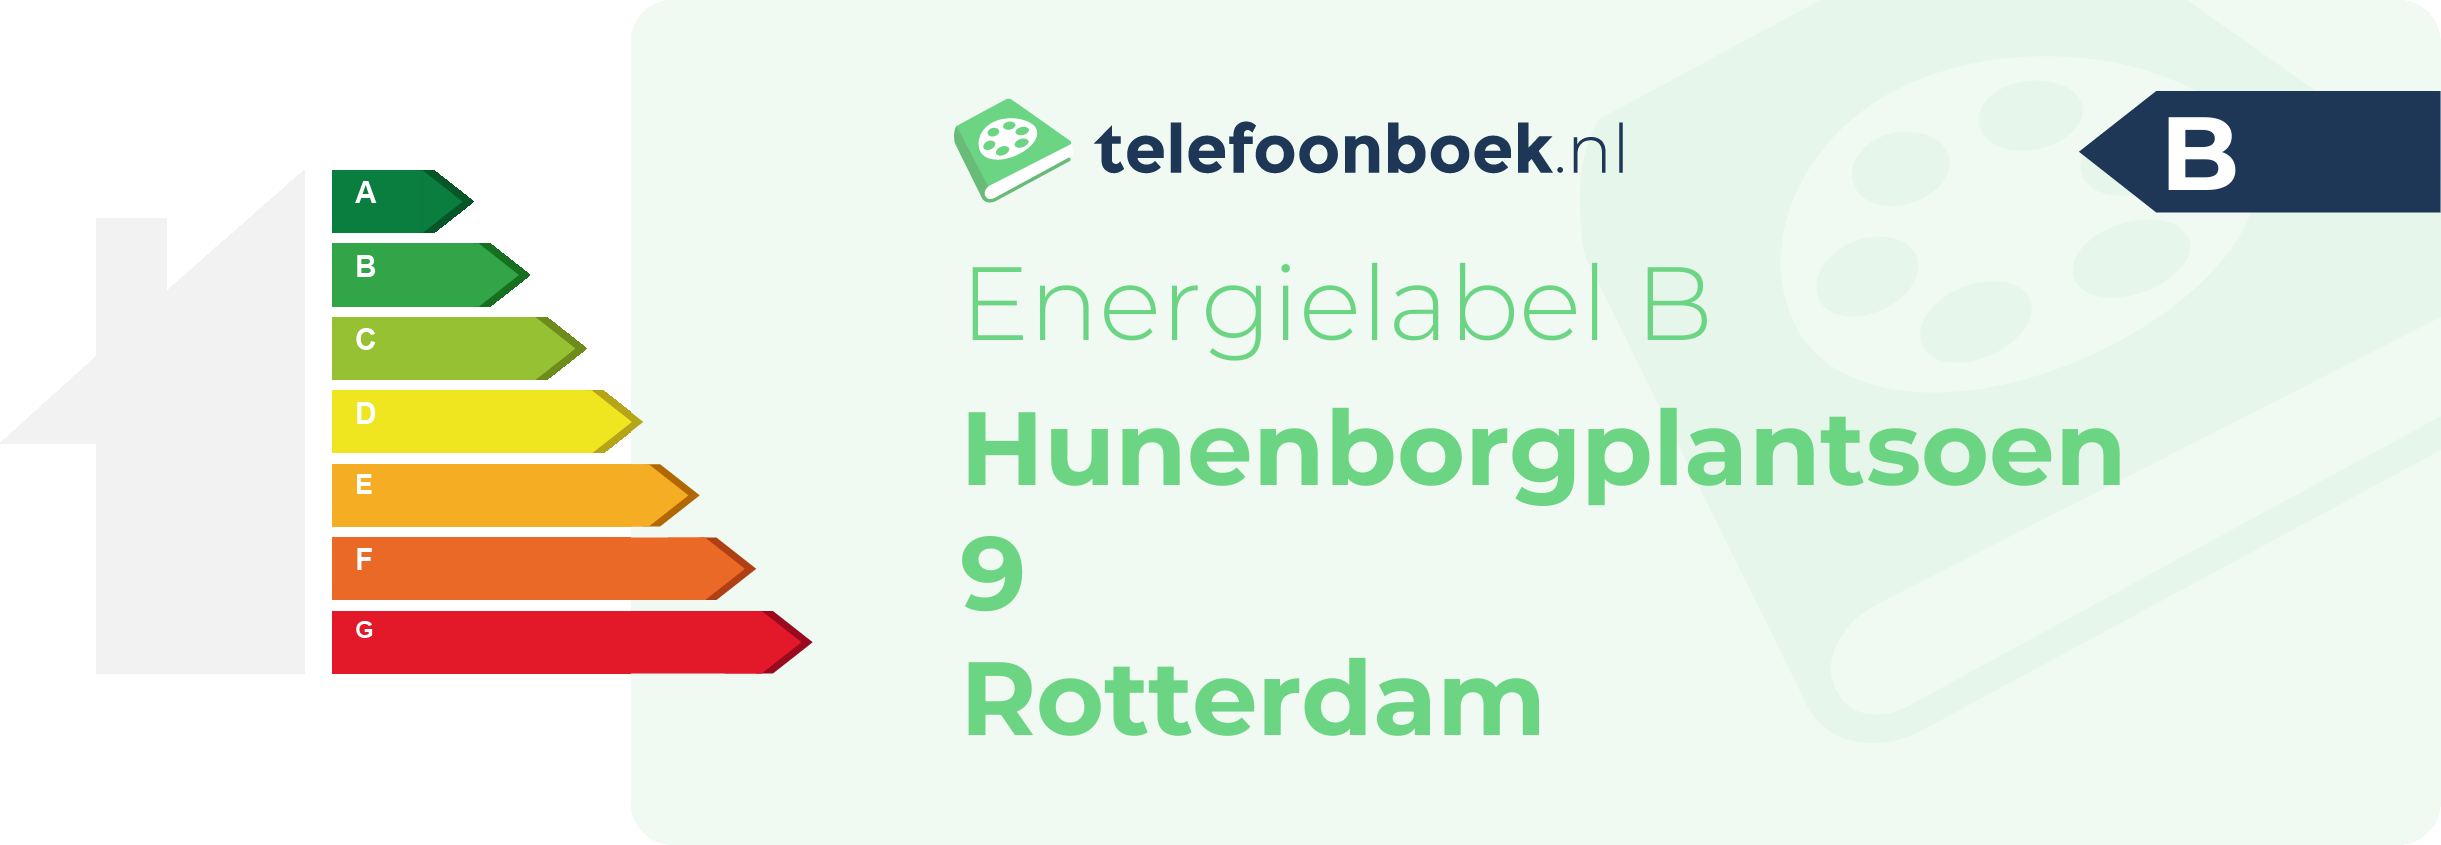 Energielabel Hunenborgplantsoen 9 Rotterdam